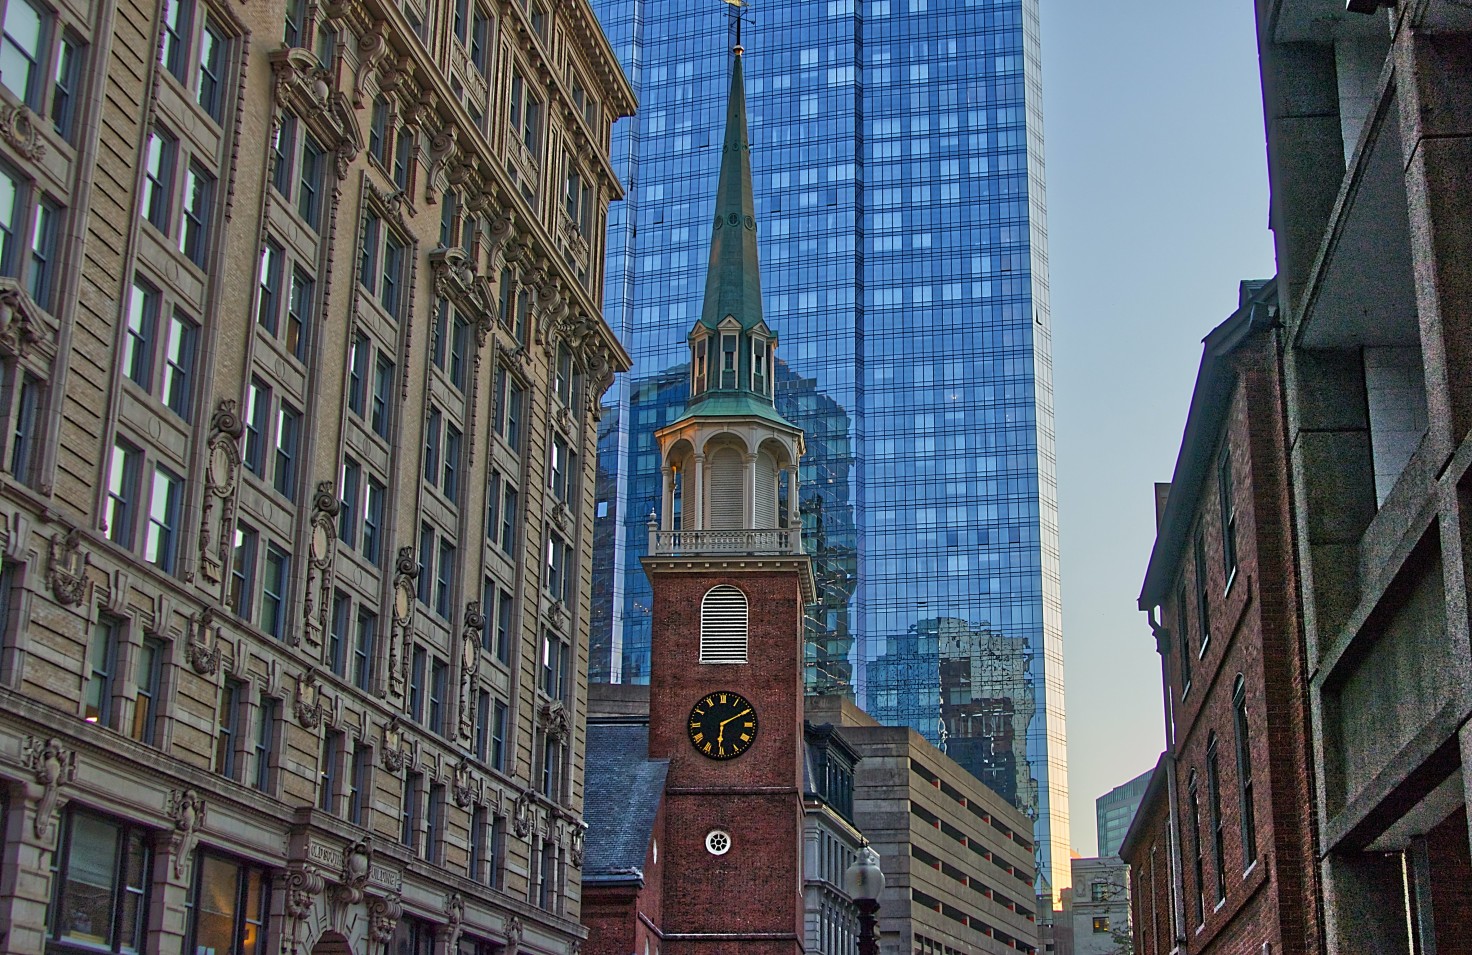 Downtown Boston, Massachusetts